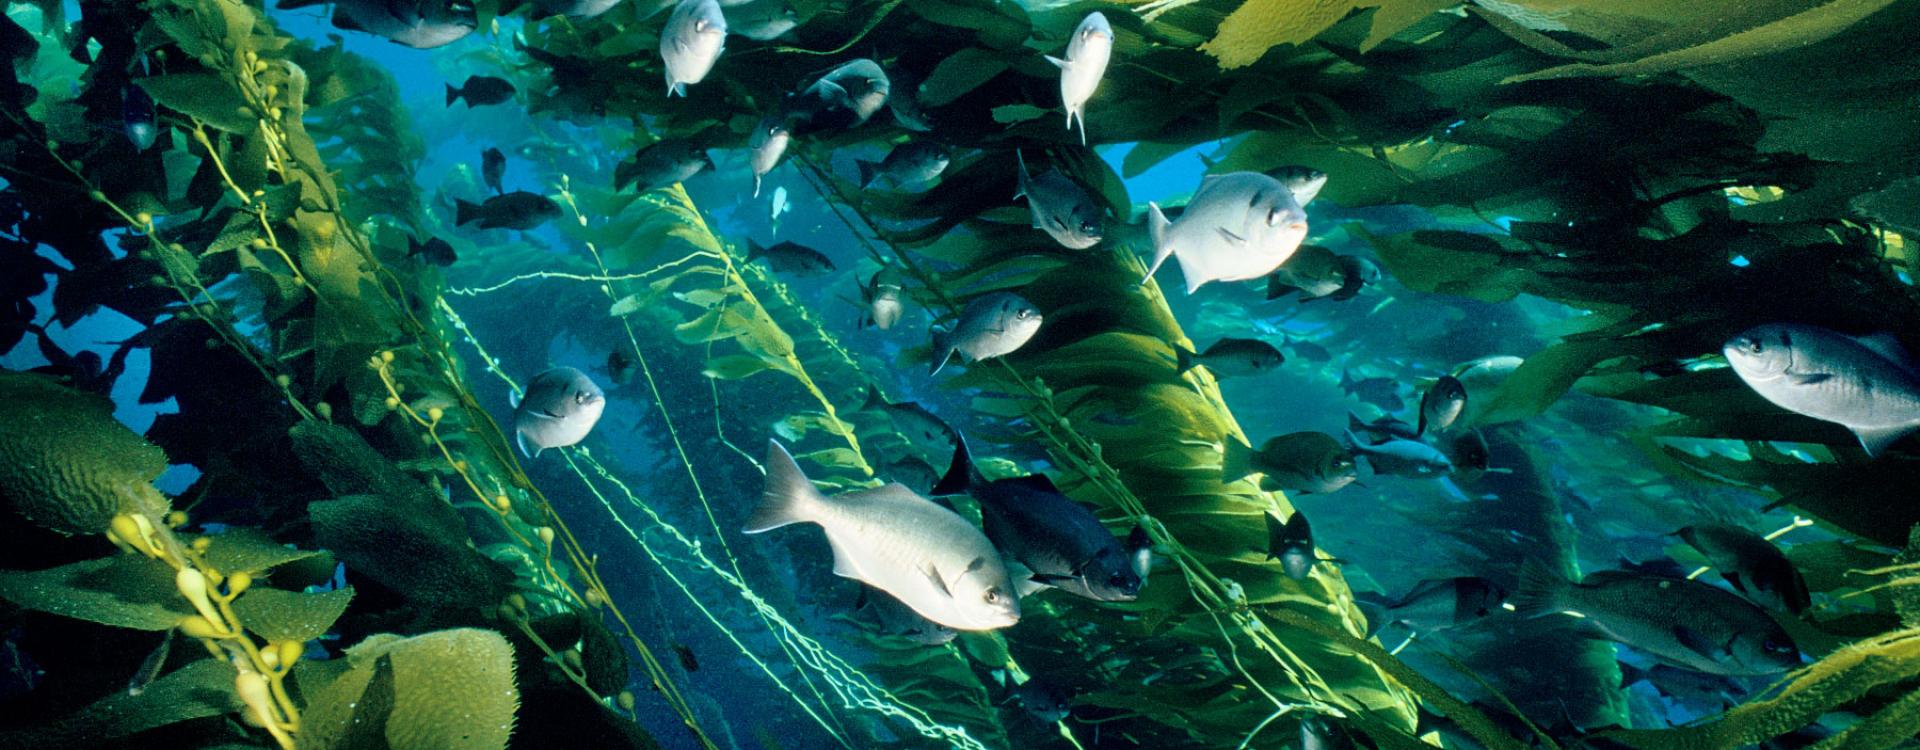 fish swim in giant kelp forest